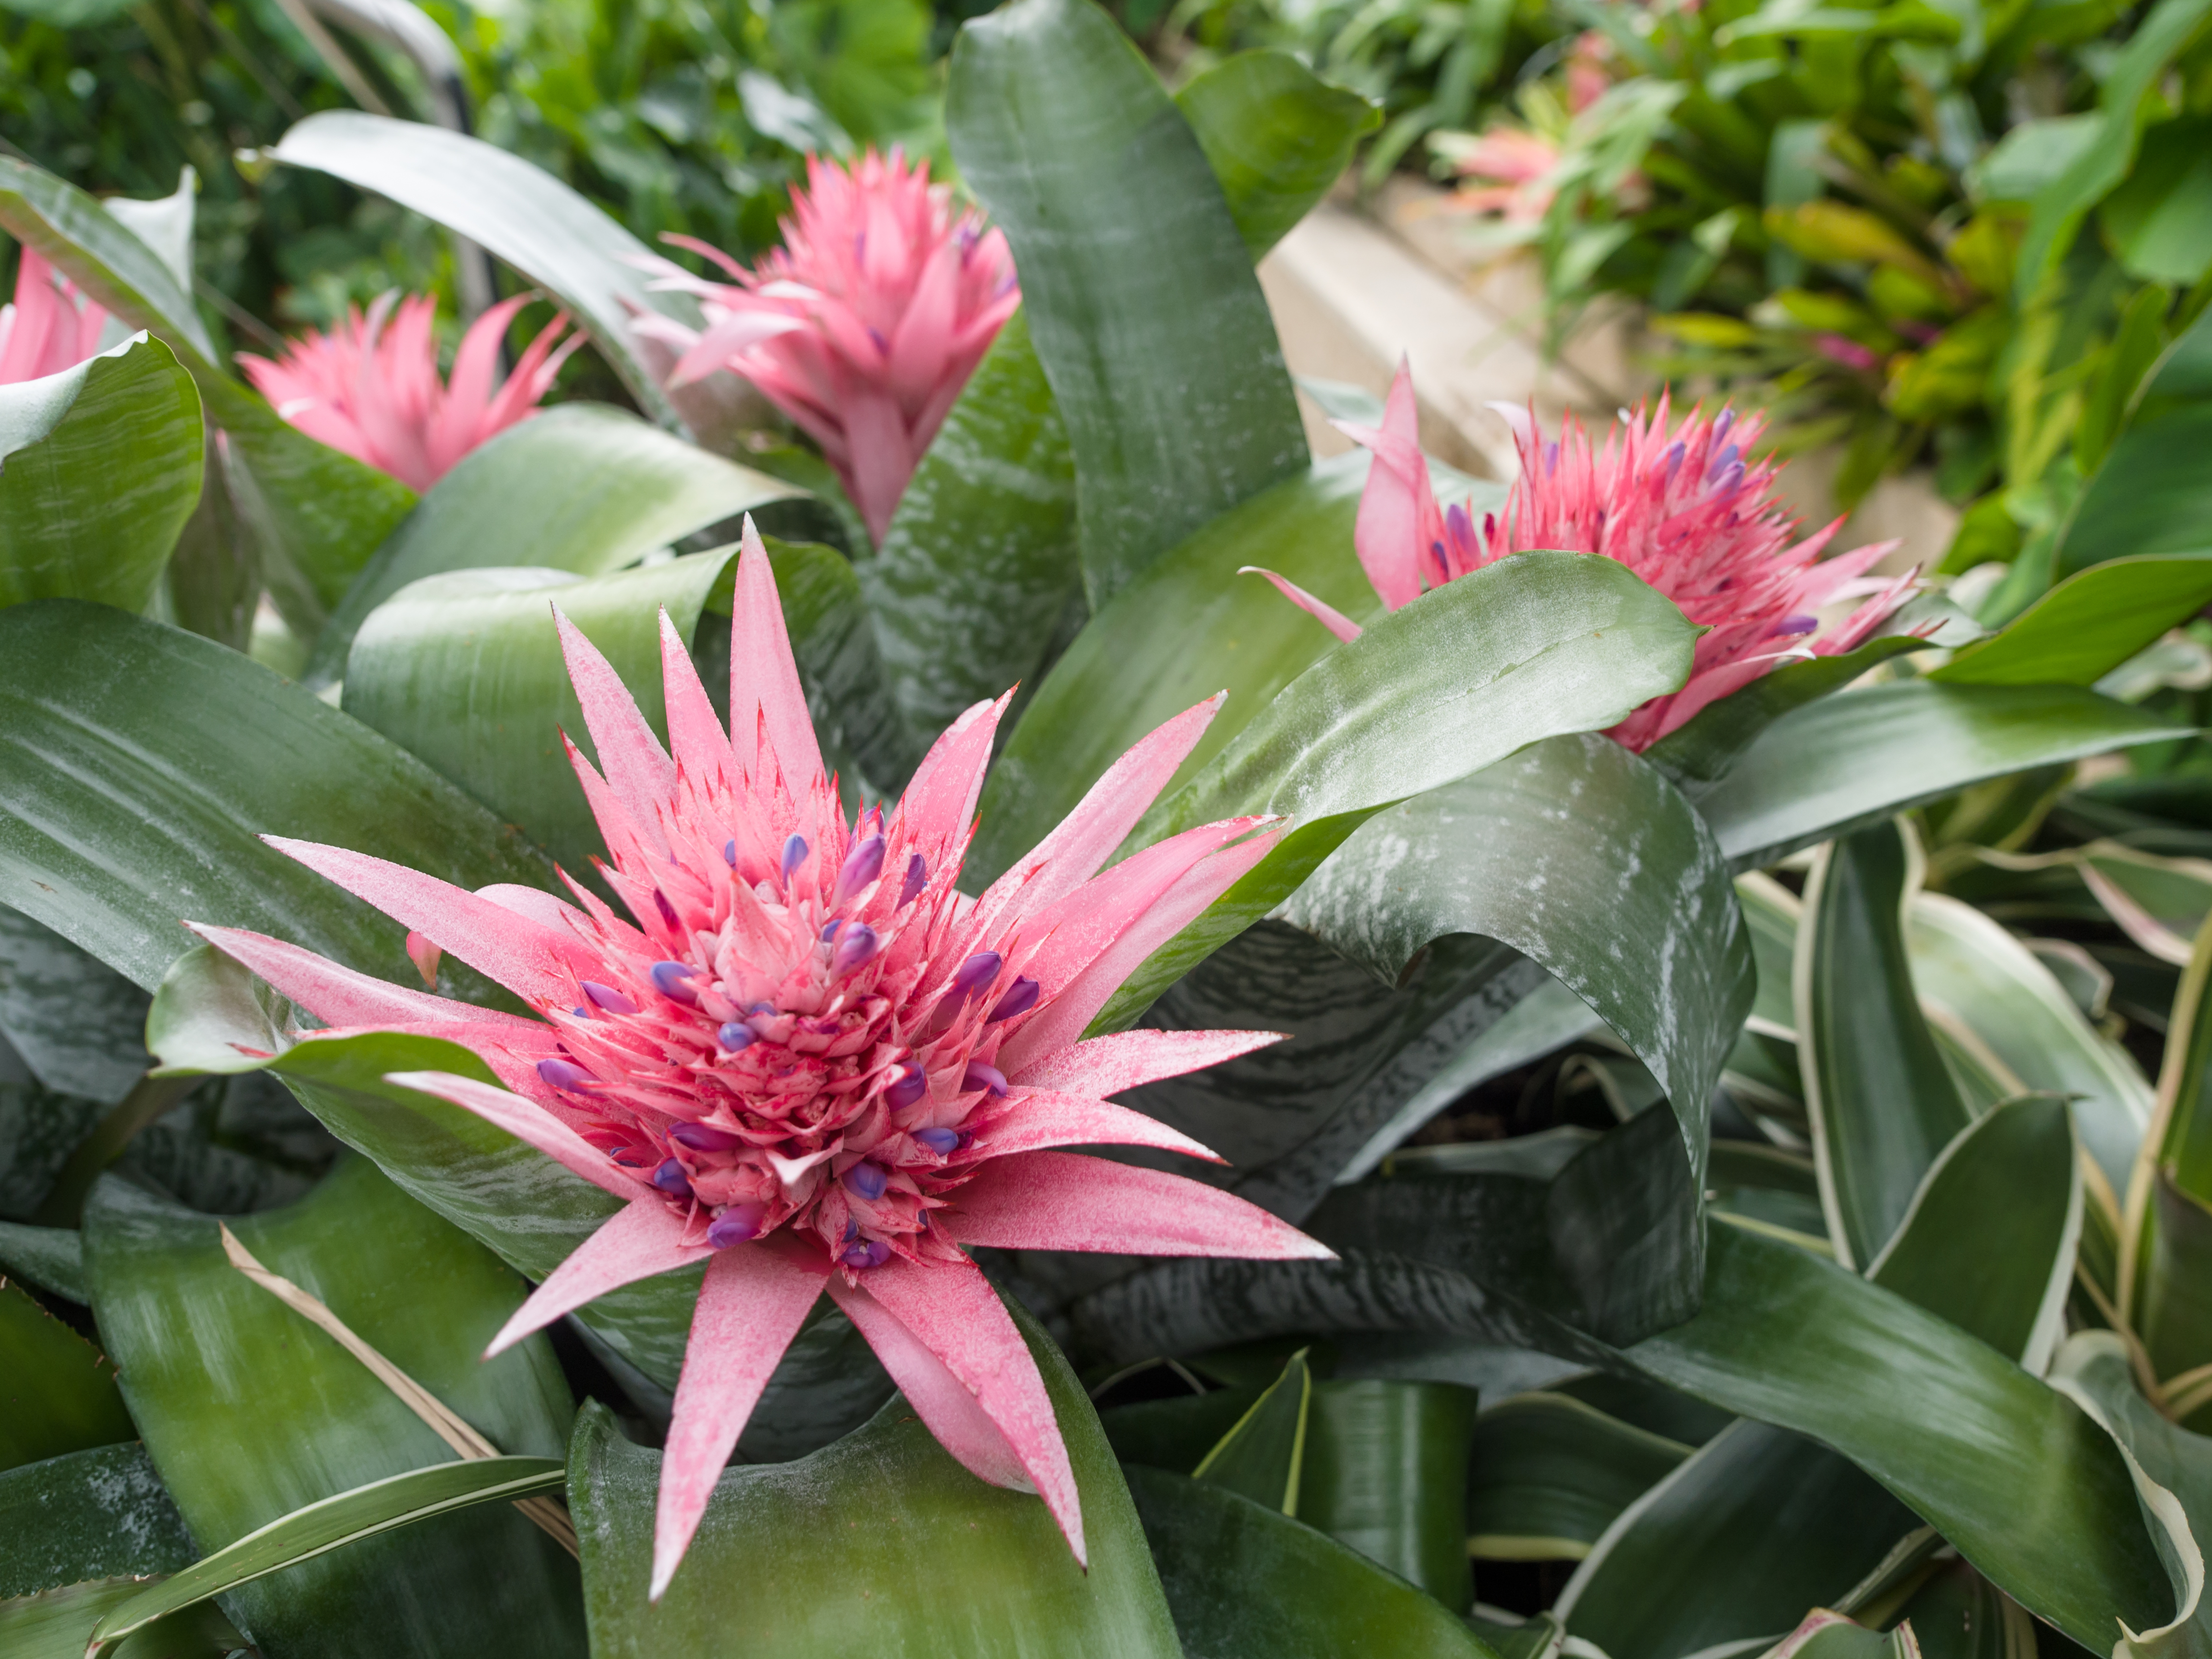 File:Pink tropical flower (14949457092).jpg - Wikimedia Commons